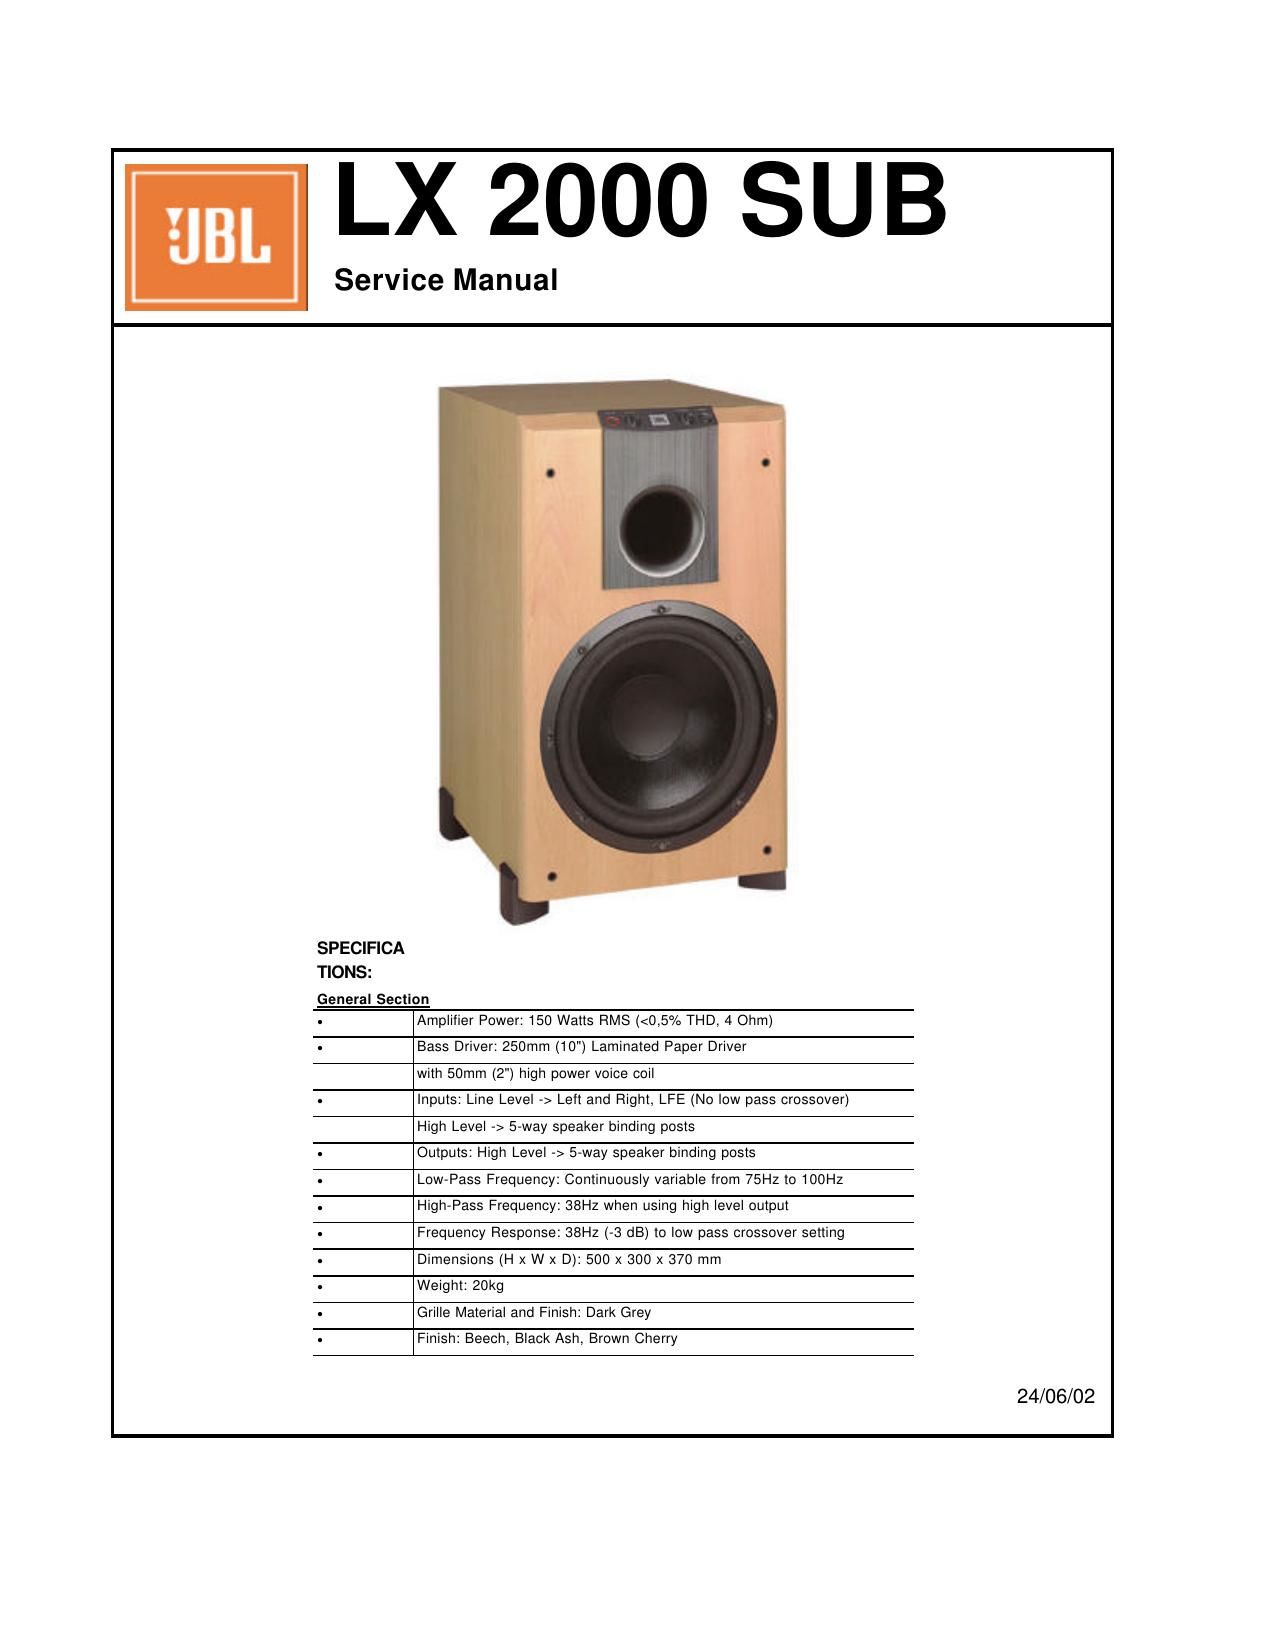 Free Audio Service Manuals download JBL LX 2000 SUB Service Manual